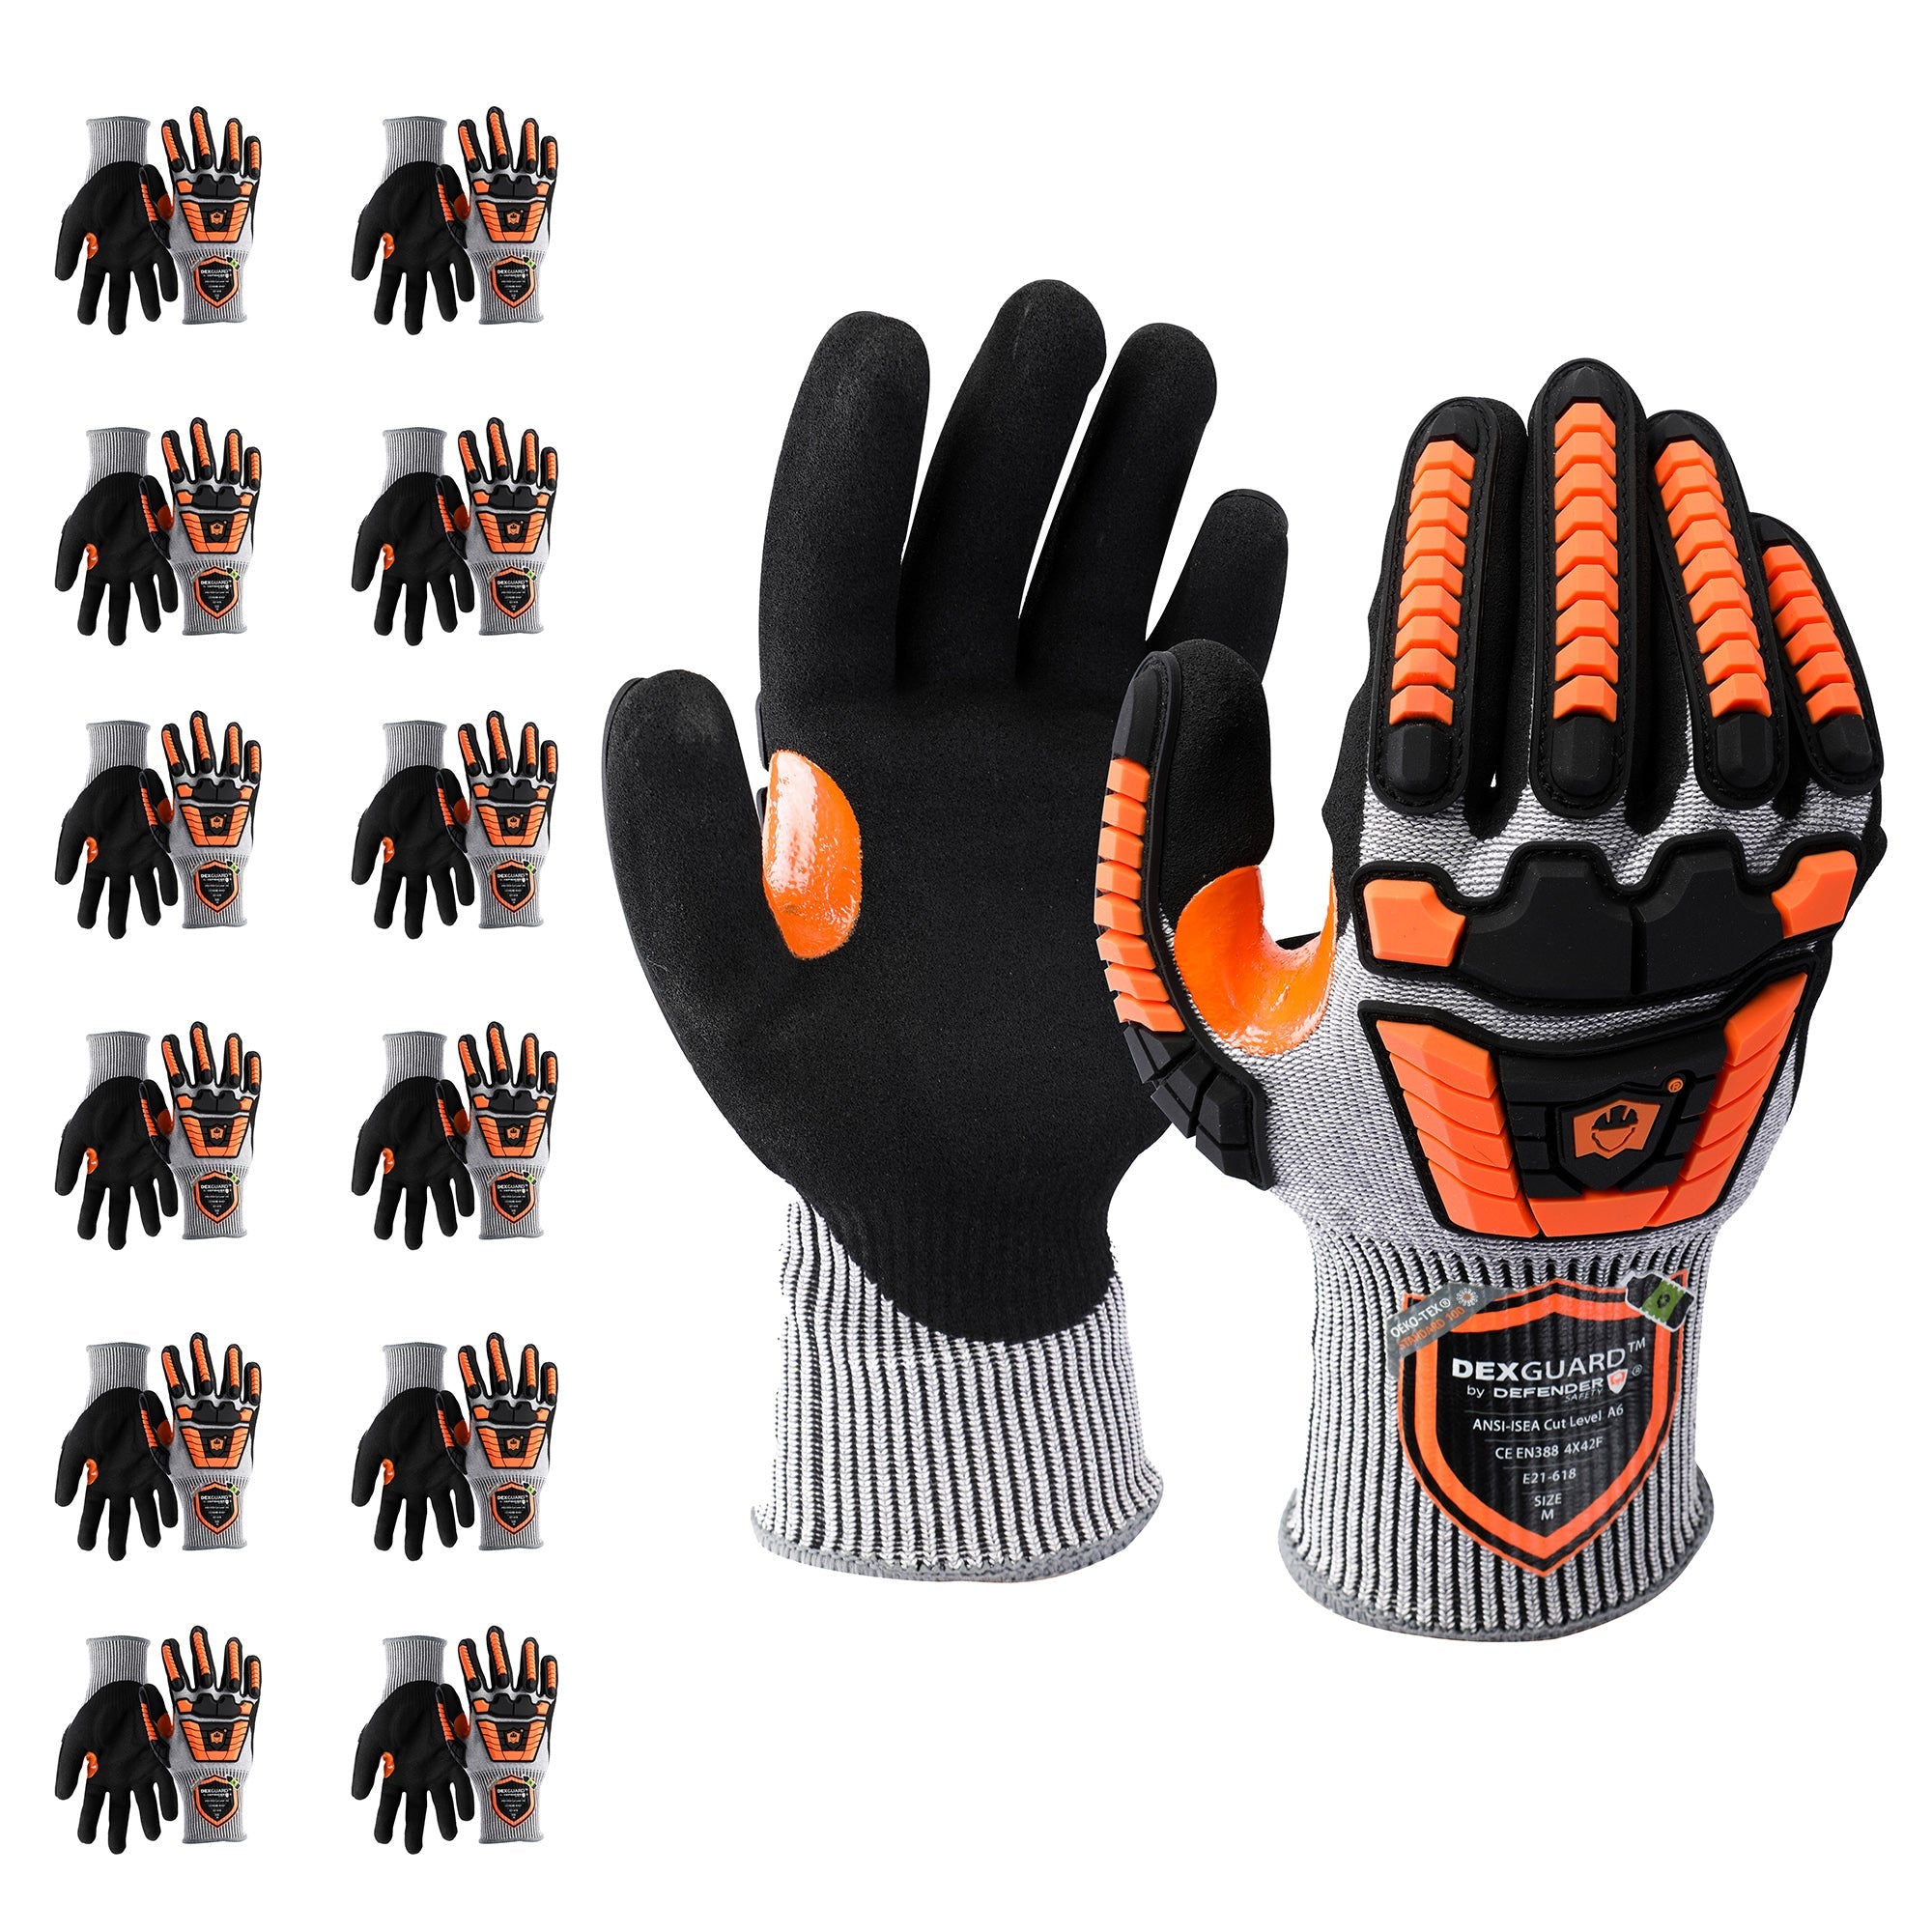 A6 Cut Resistant Gloves (12 Pack), Back of Hand Protection, Level 4 Abrasion Resistant, Textured Nitrile Coating Defender Safety DEXGUARD, Medium